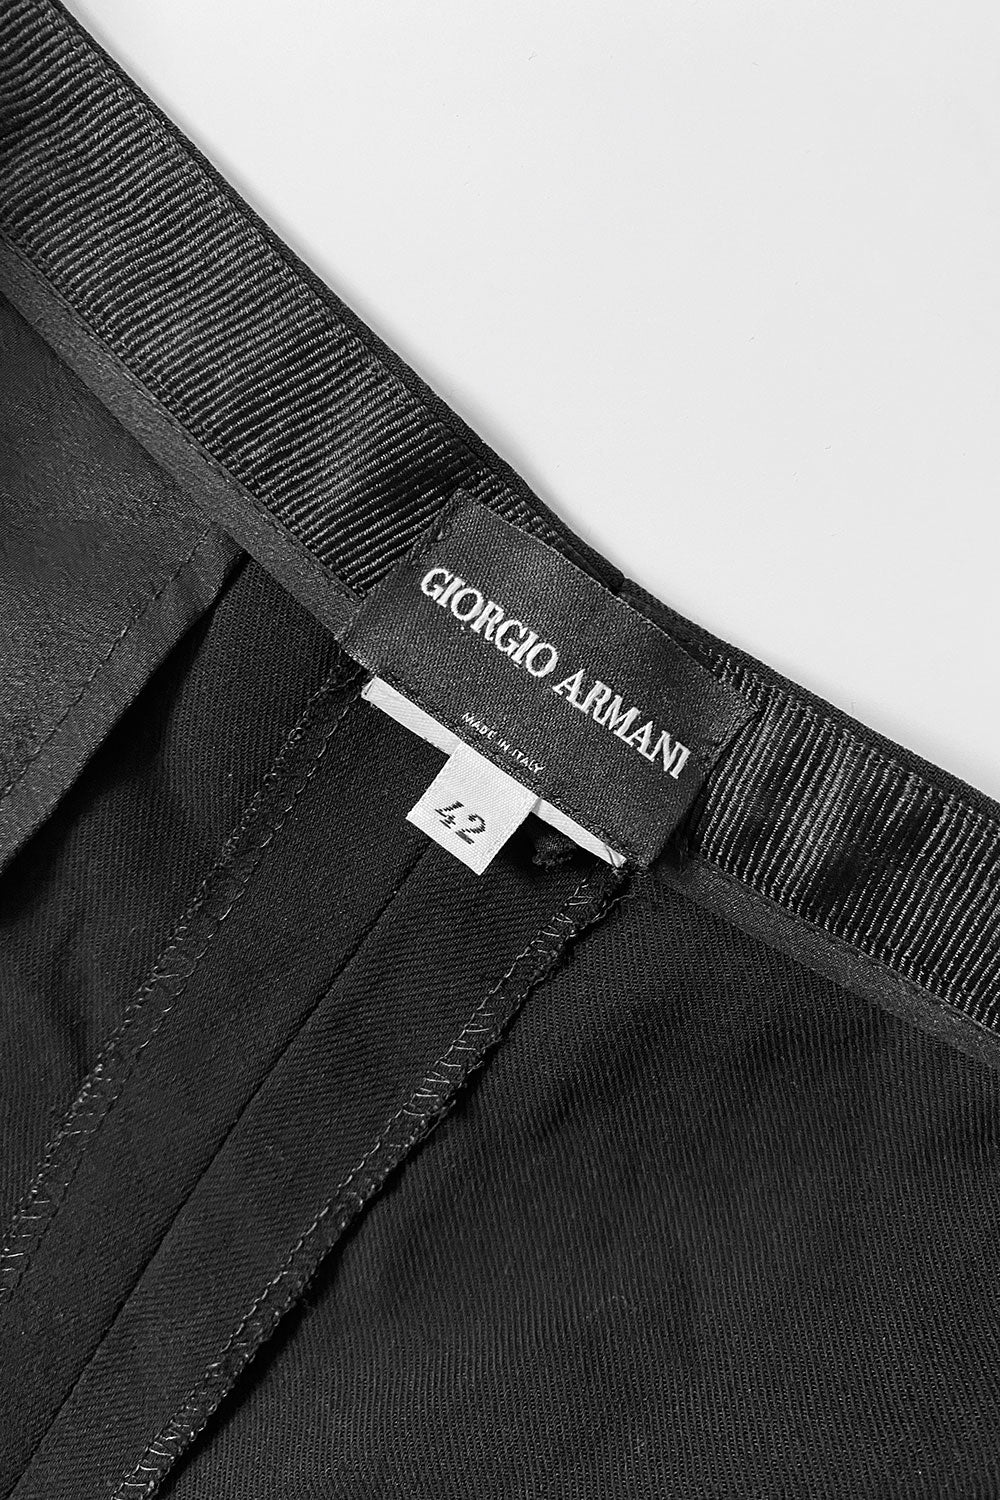 Georgio Armani Lana Wool High Waist Tailored Trousers Size 8-10